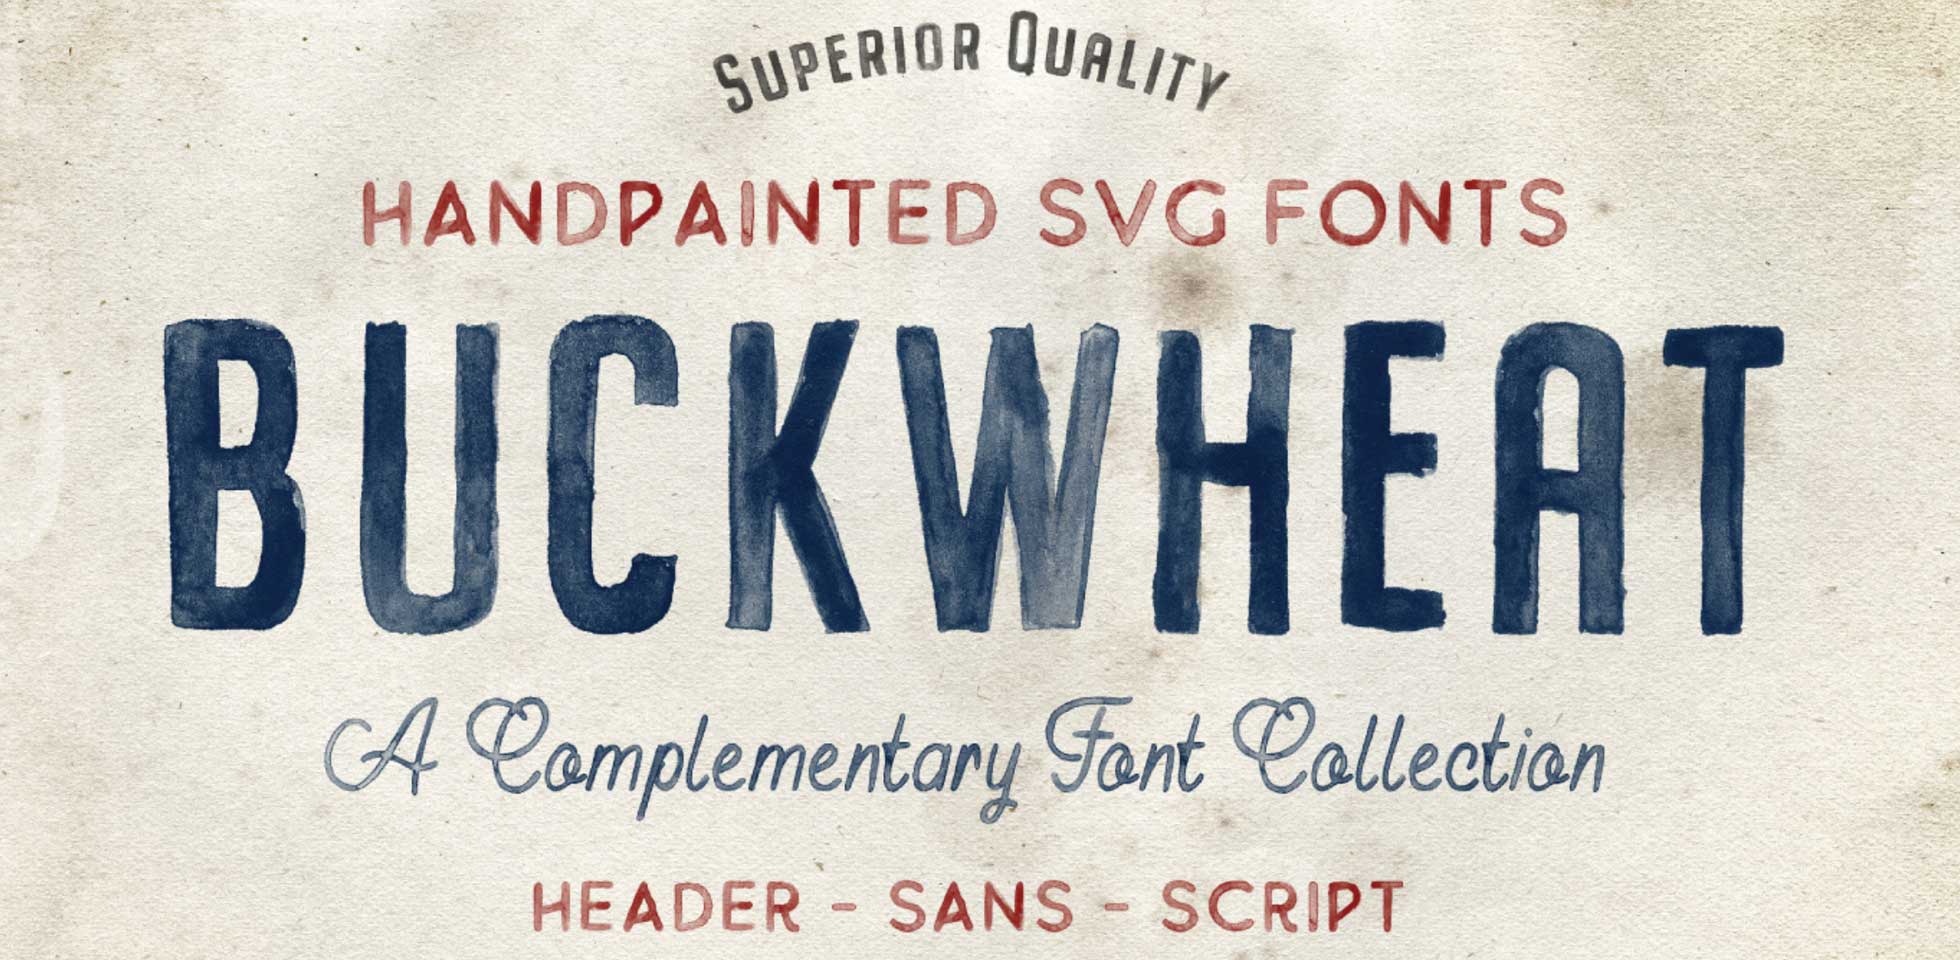 Free Download: Buckwheat SVG Font